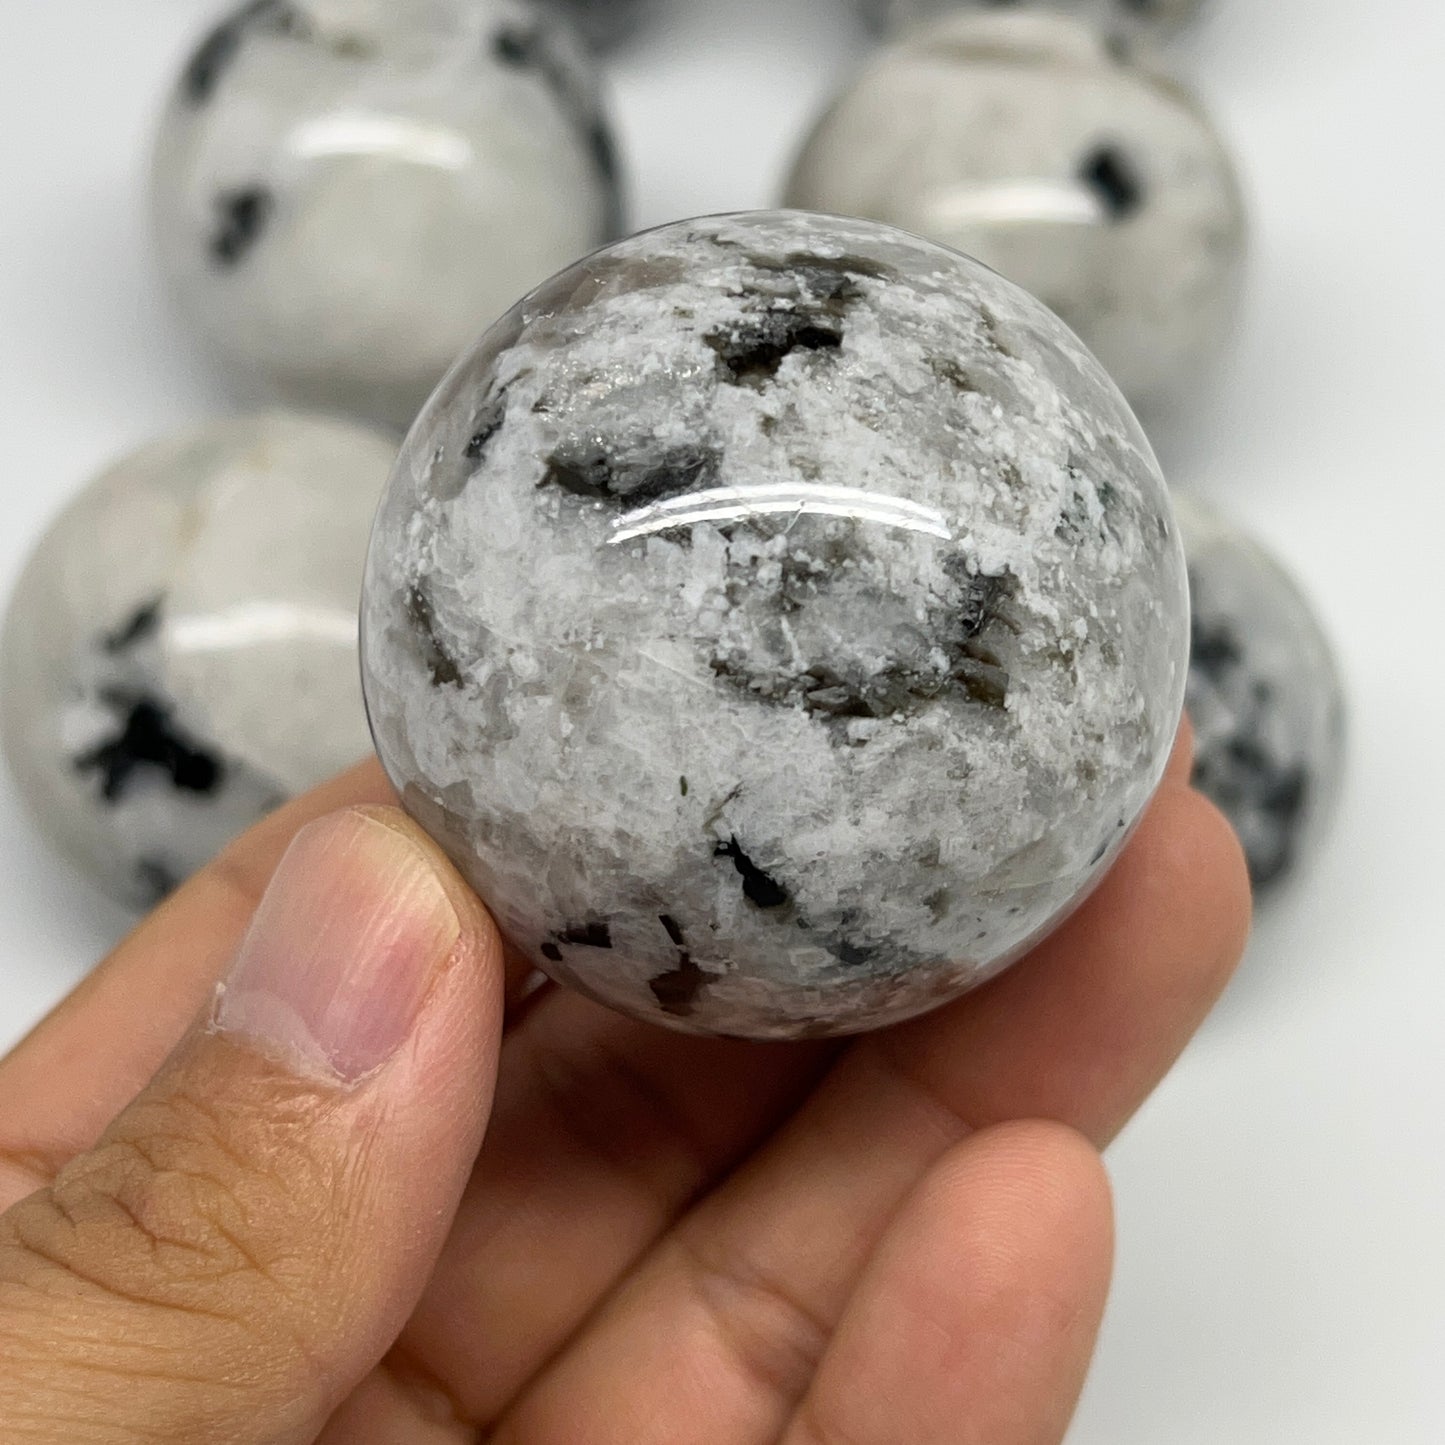 1075g, 1.8" - 2", 7pcs, Rainbow Moonstone Spheres Gemstones @India, B21425